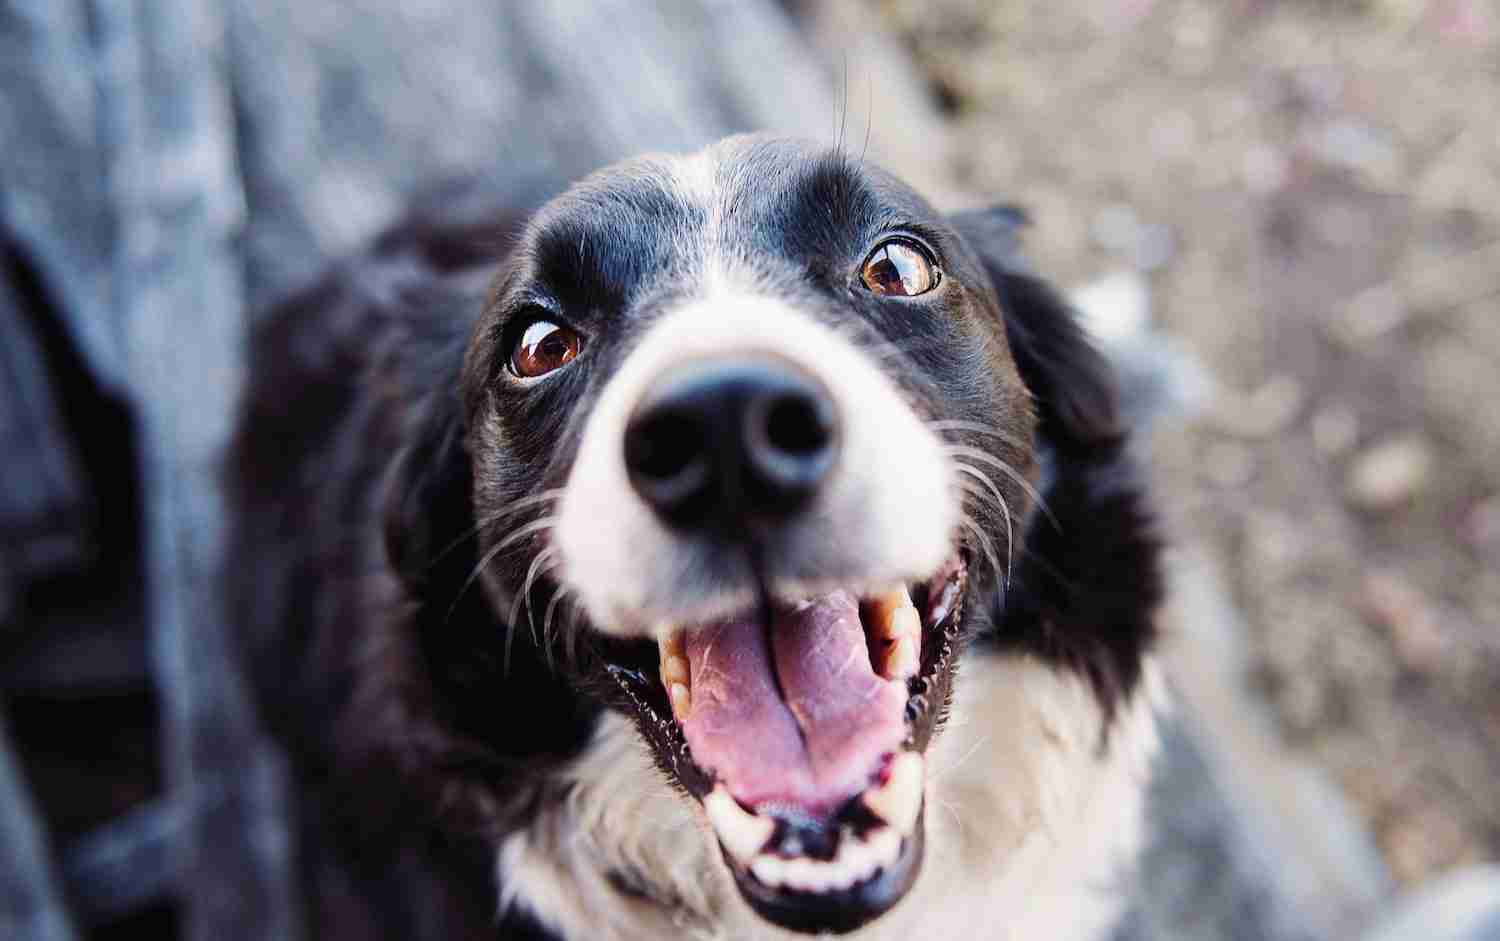 Adopt DON'T Shop: 7 Reasons to Adopt a Shelter Dog